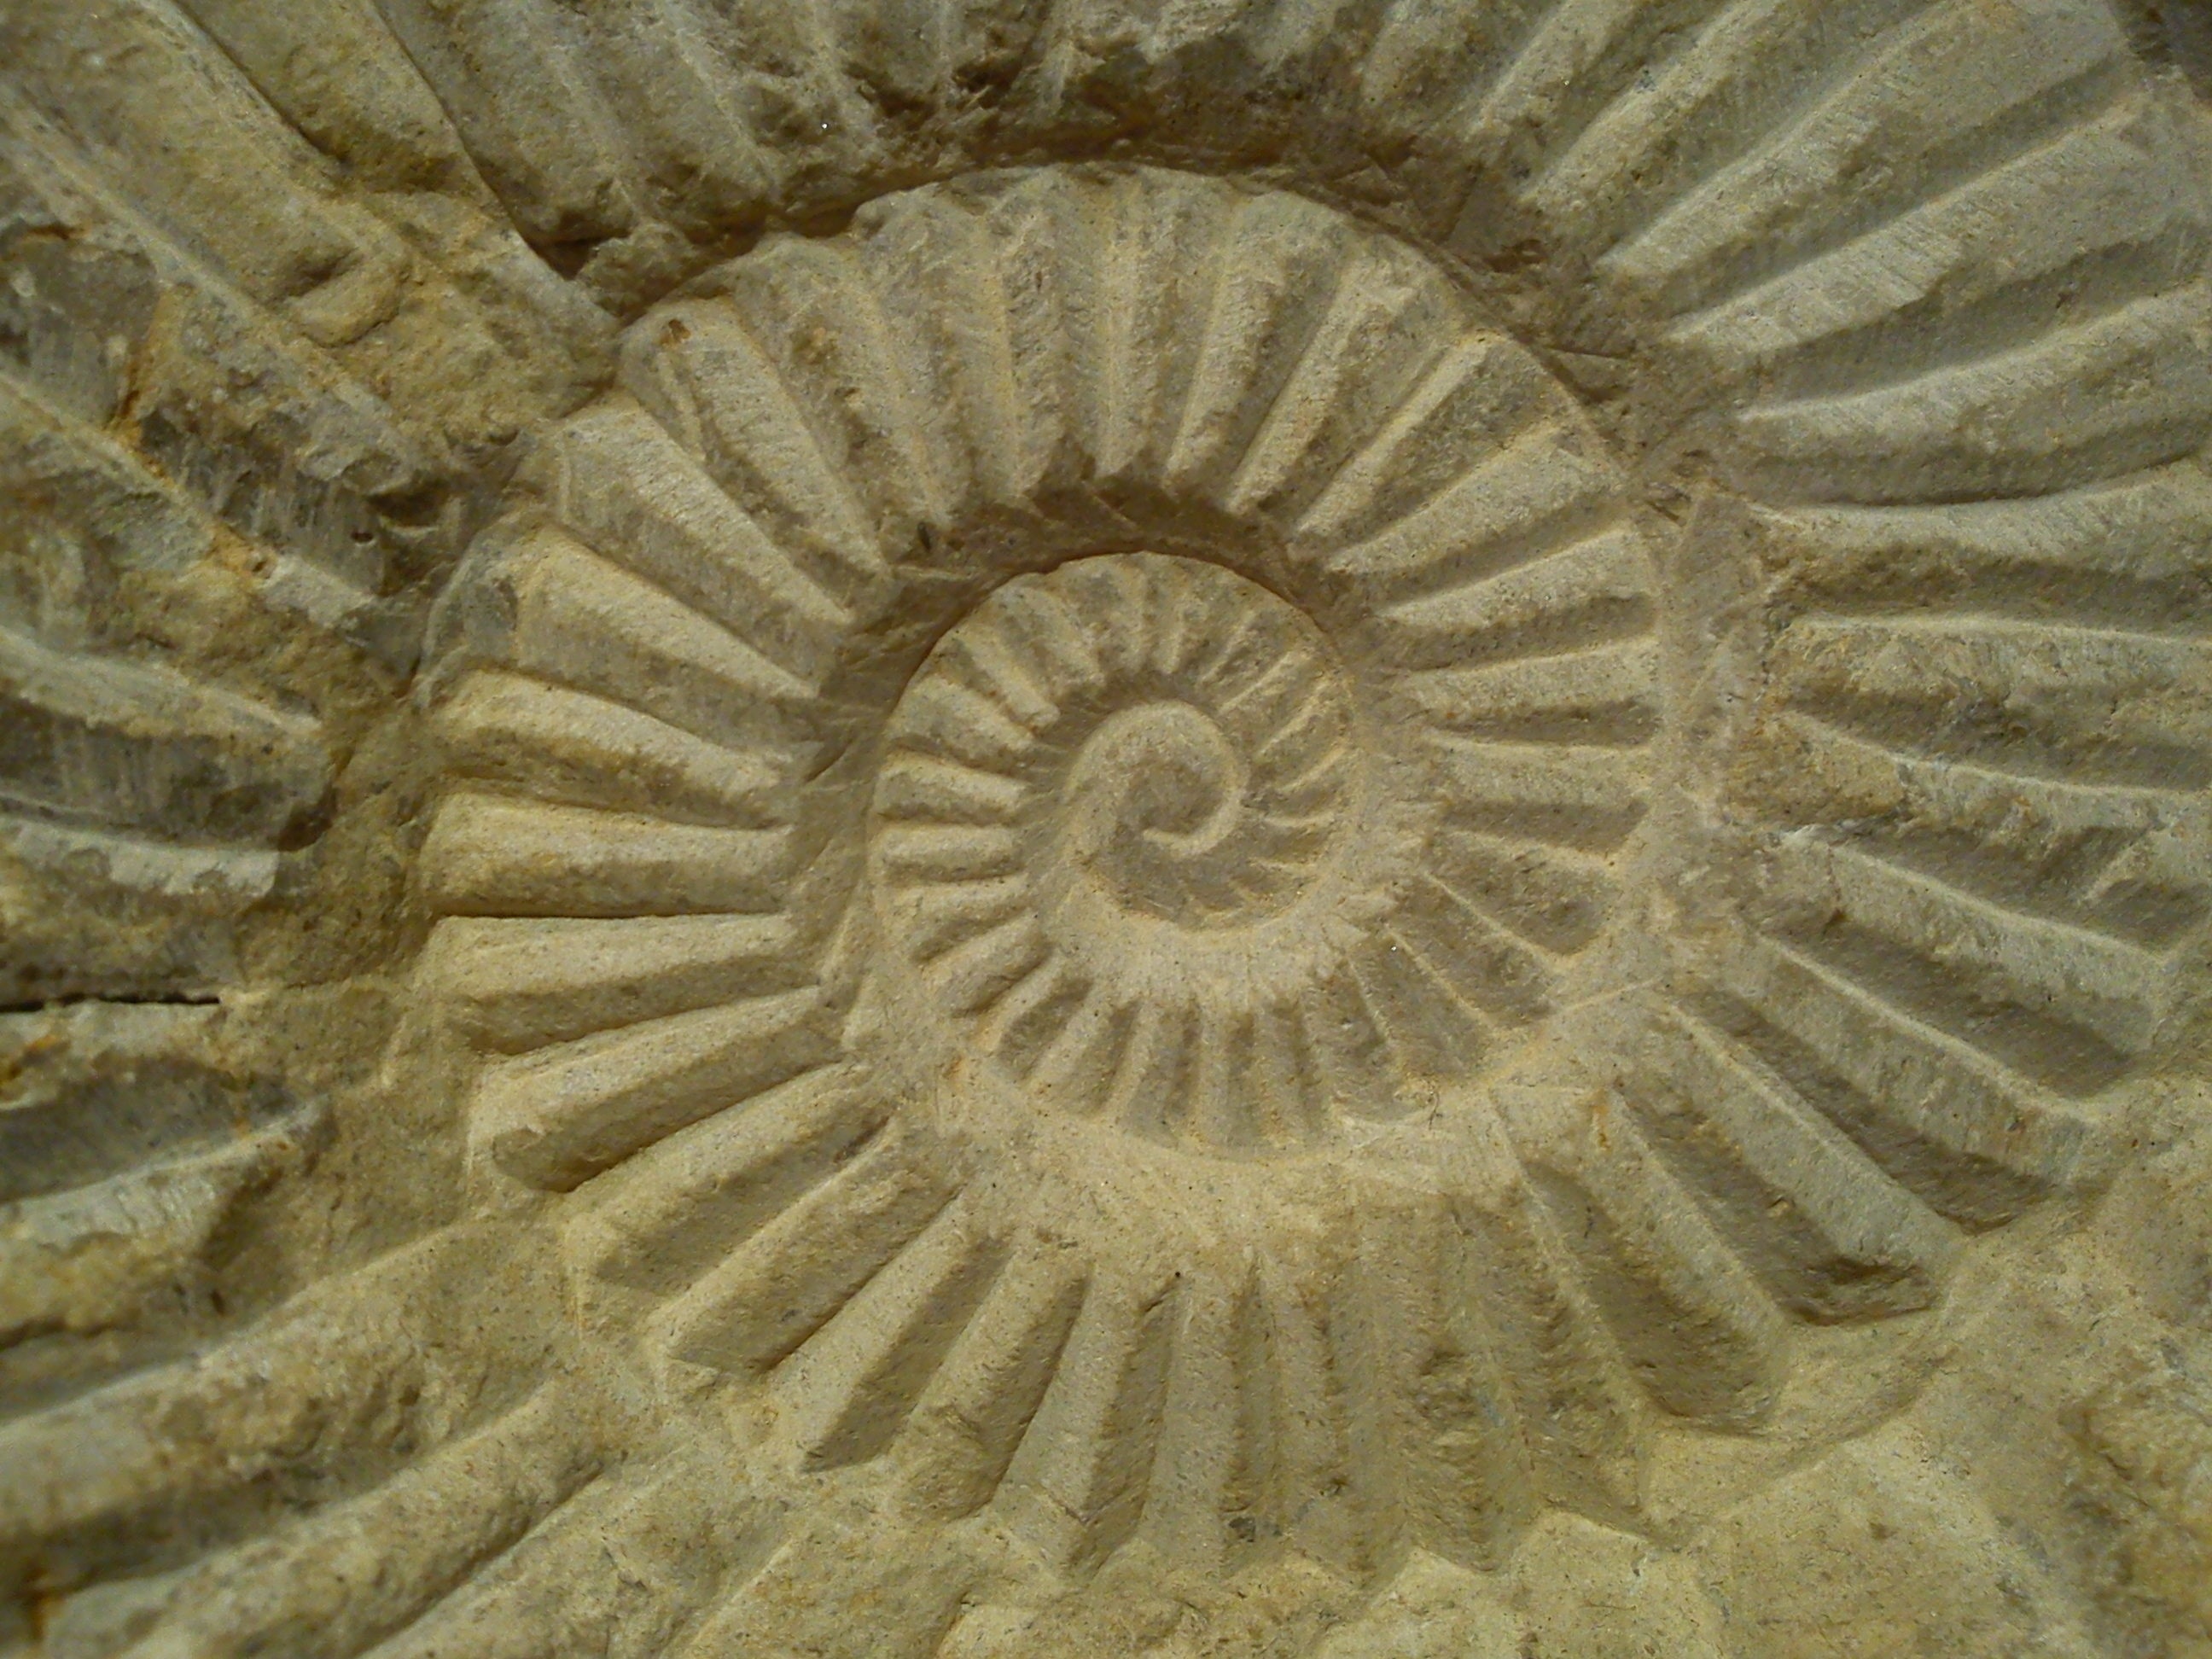 shell artifact